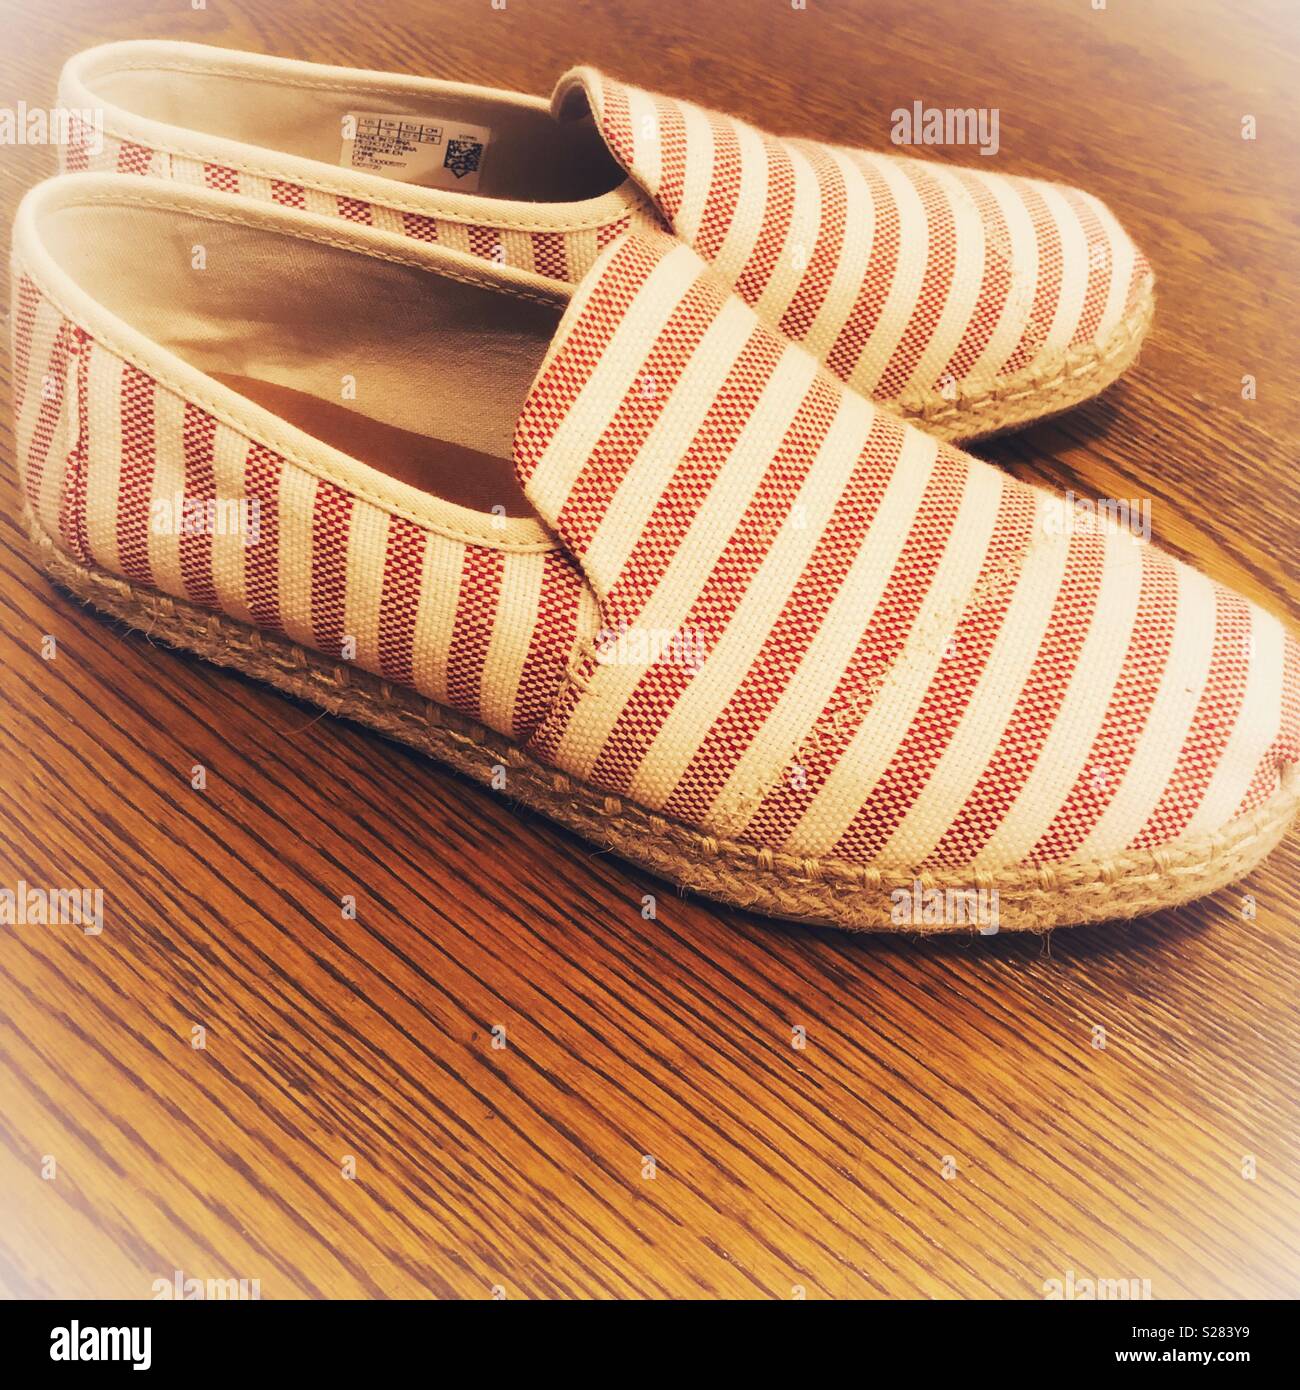 Stripy shoes on wood floor Stock Photo